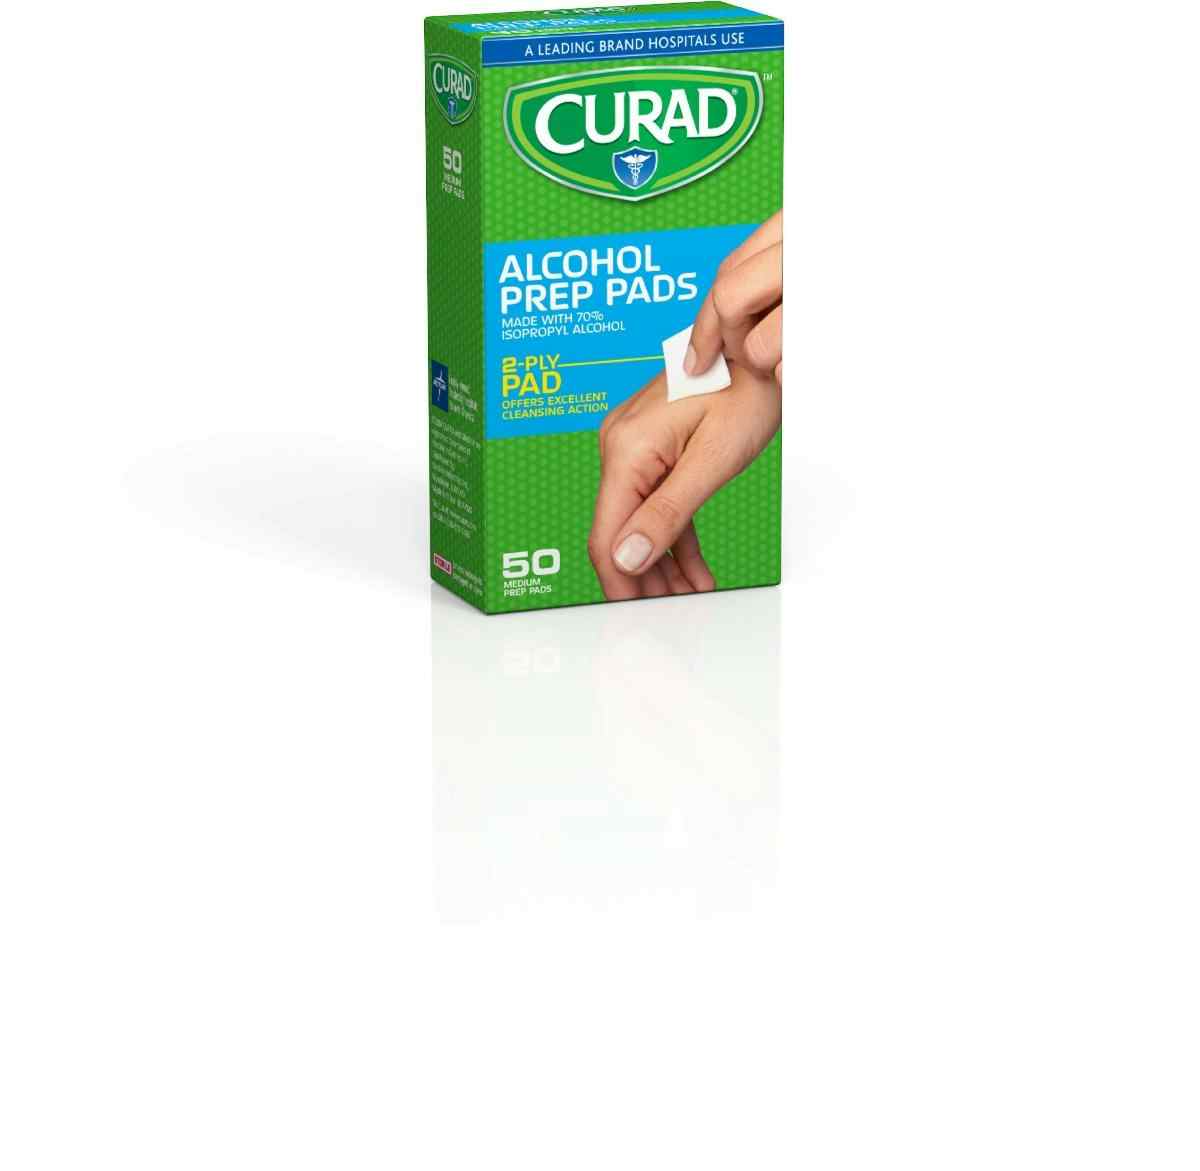 Curad Alcohol Prep Pads, CUR0907375RB, Case of 24